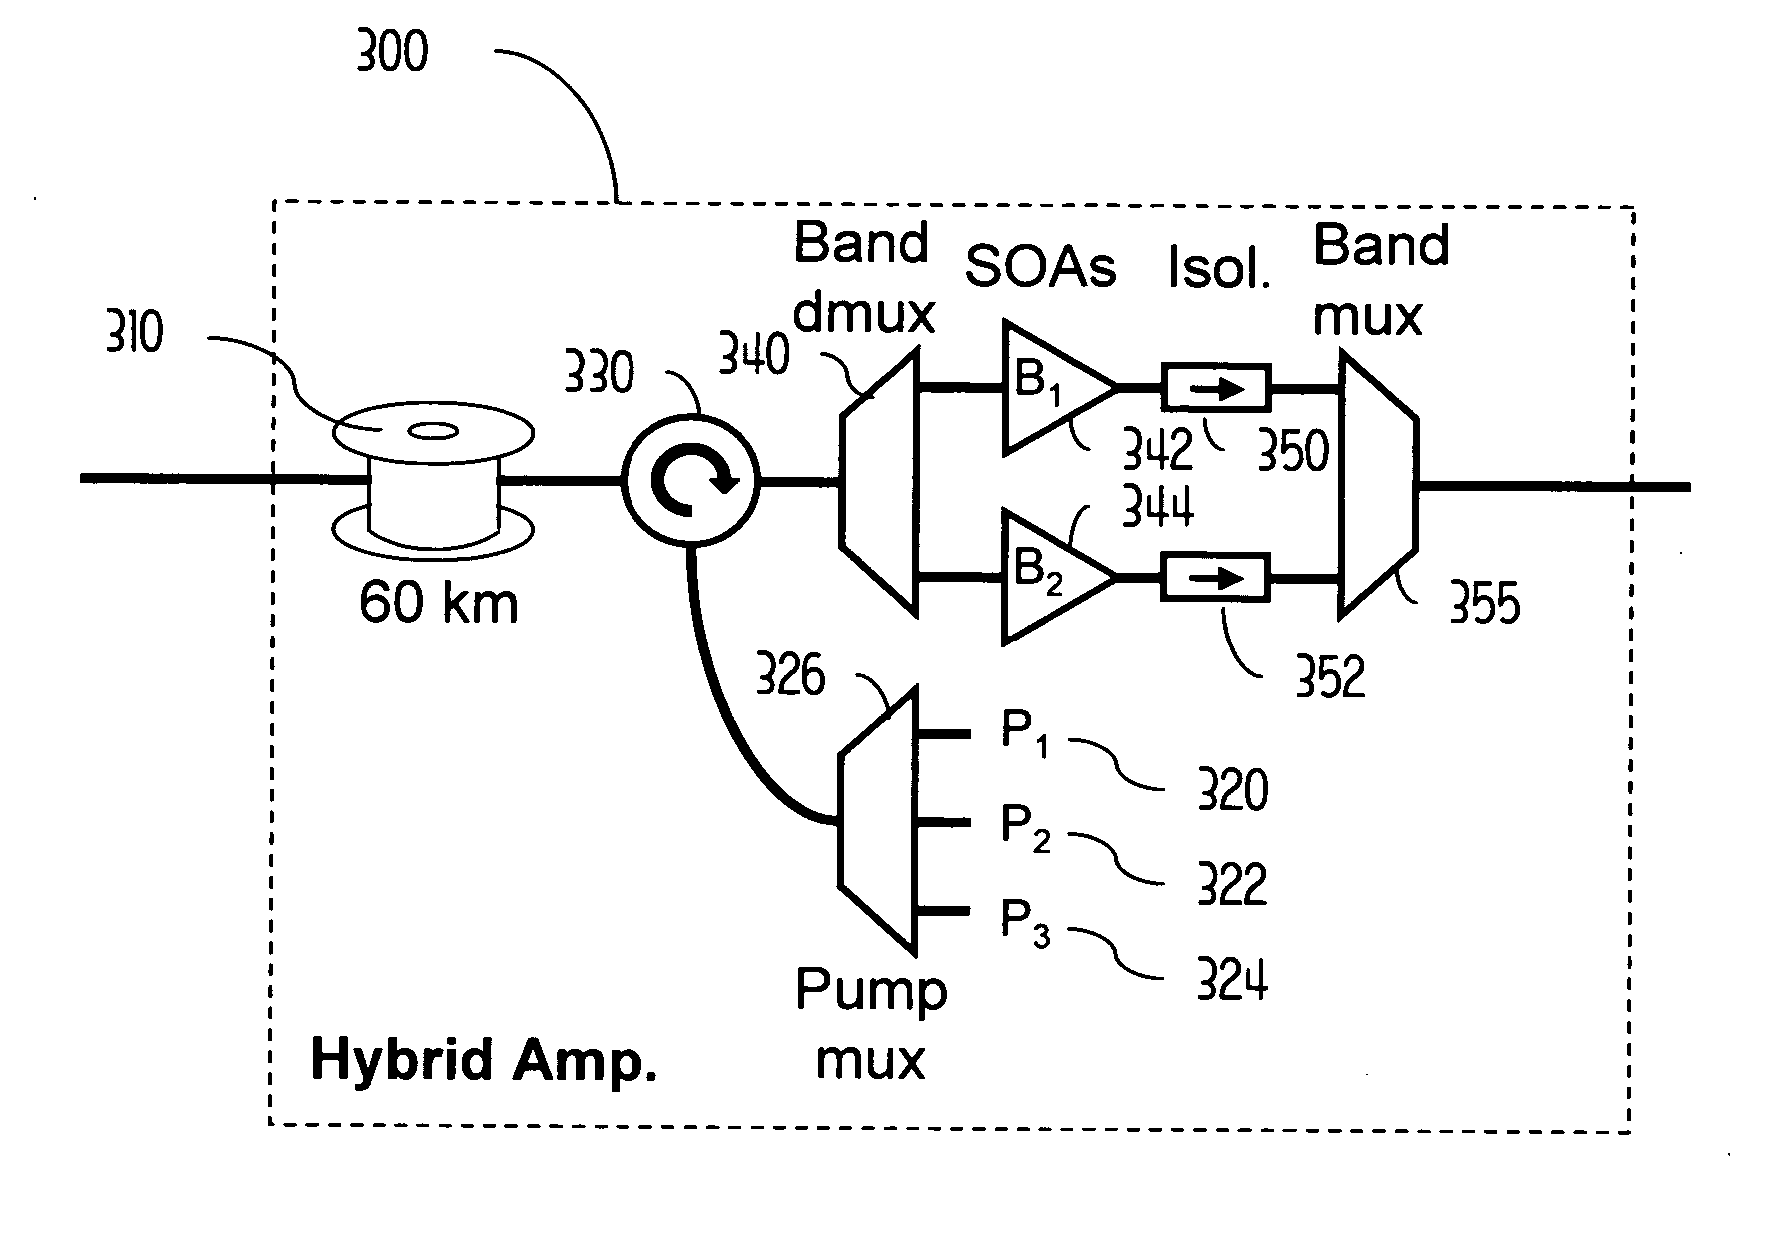 Multi-band hybrid SOA-raman amplifier for CWDM